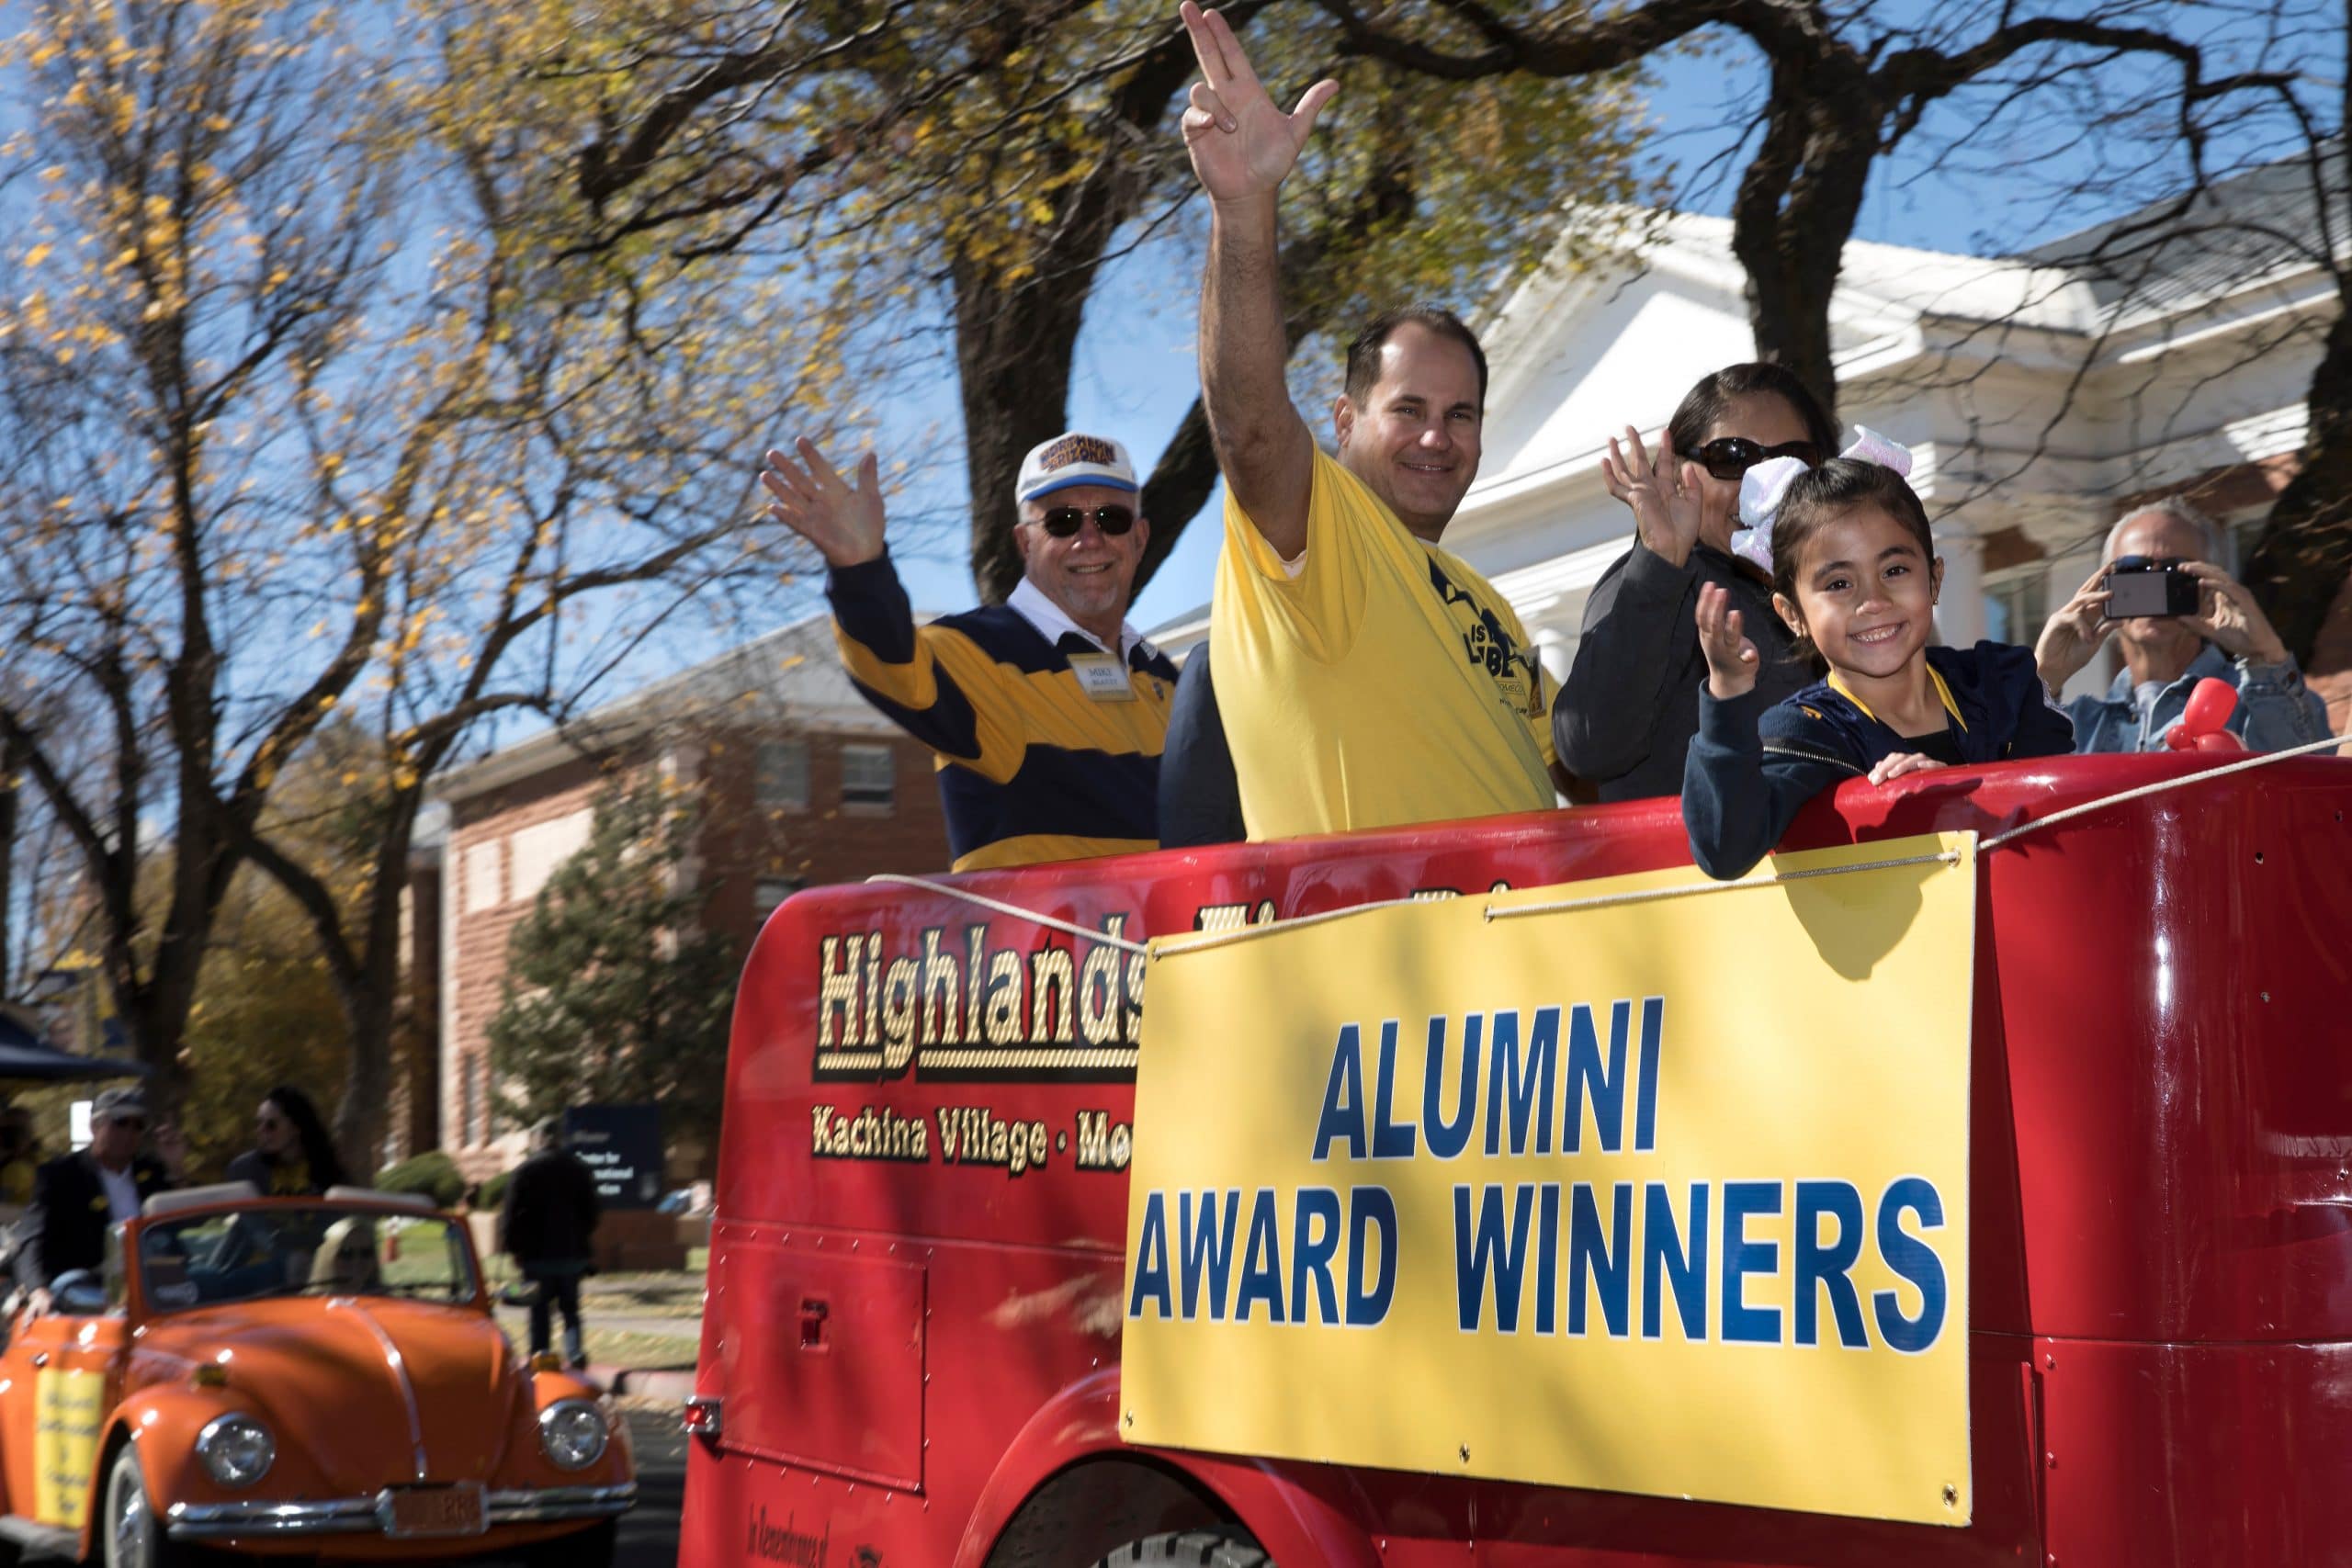 Alumni Award Winners waving on parade float.